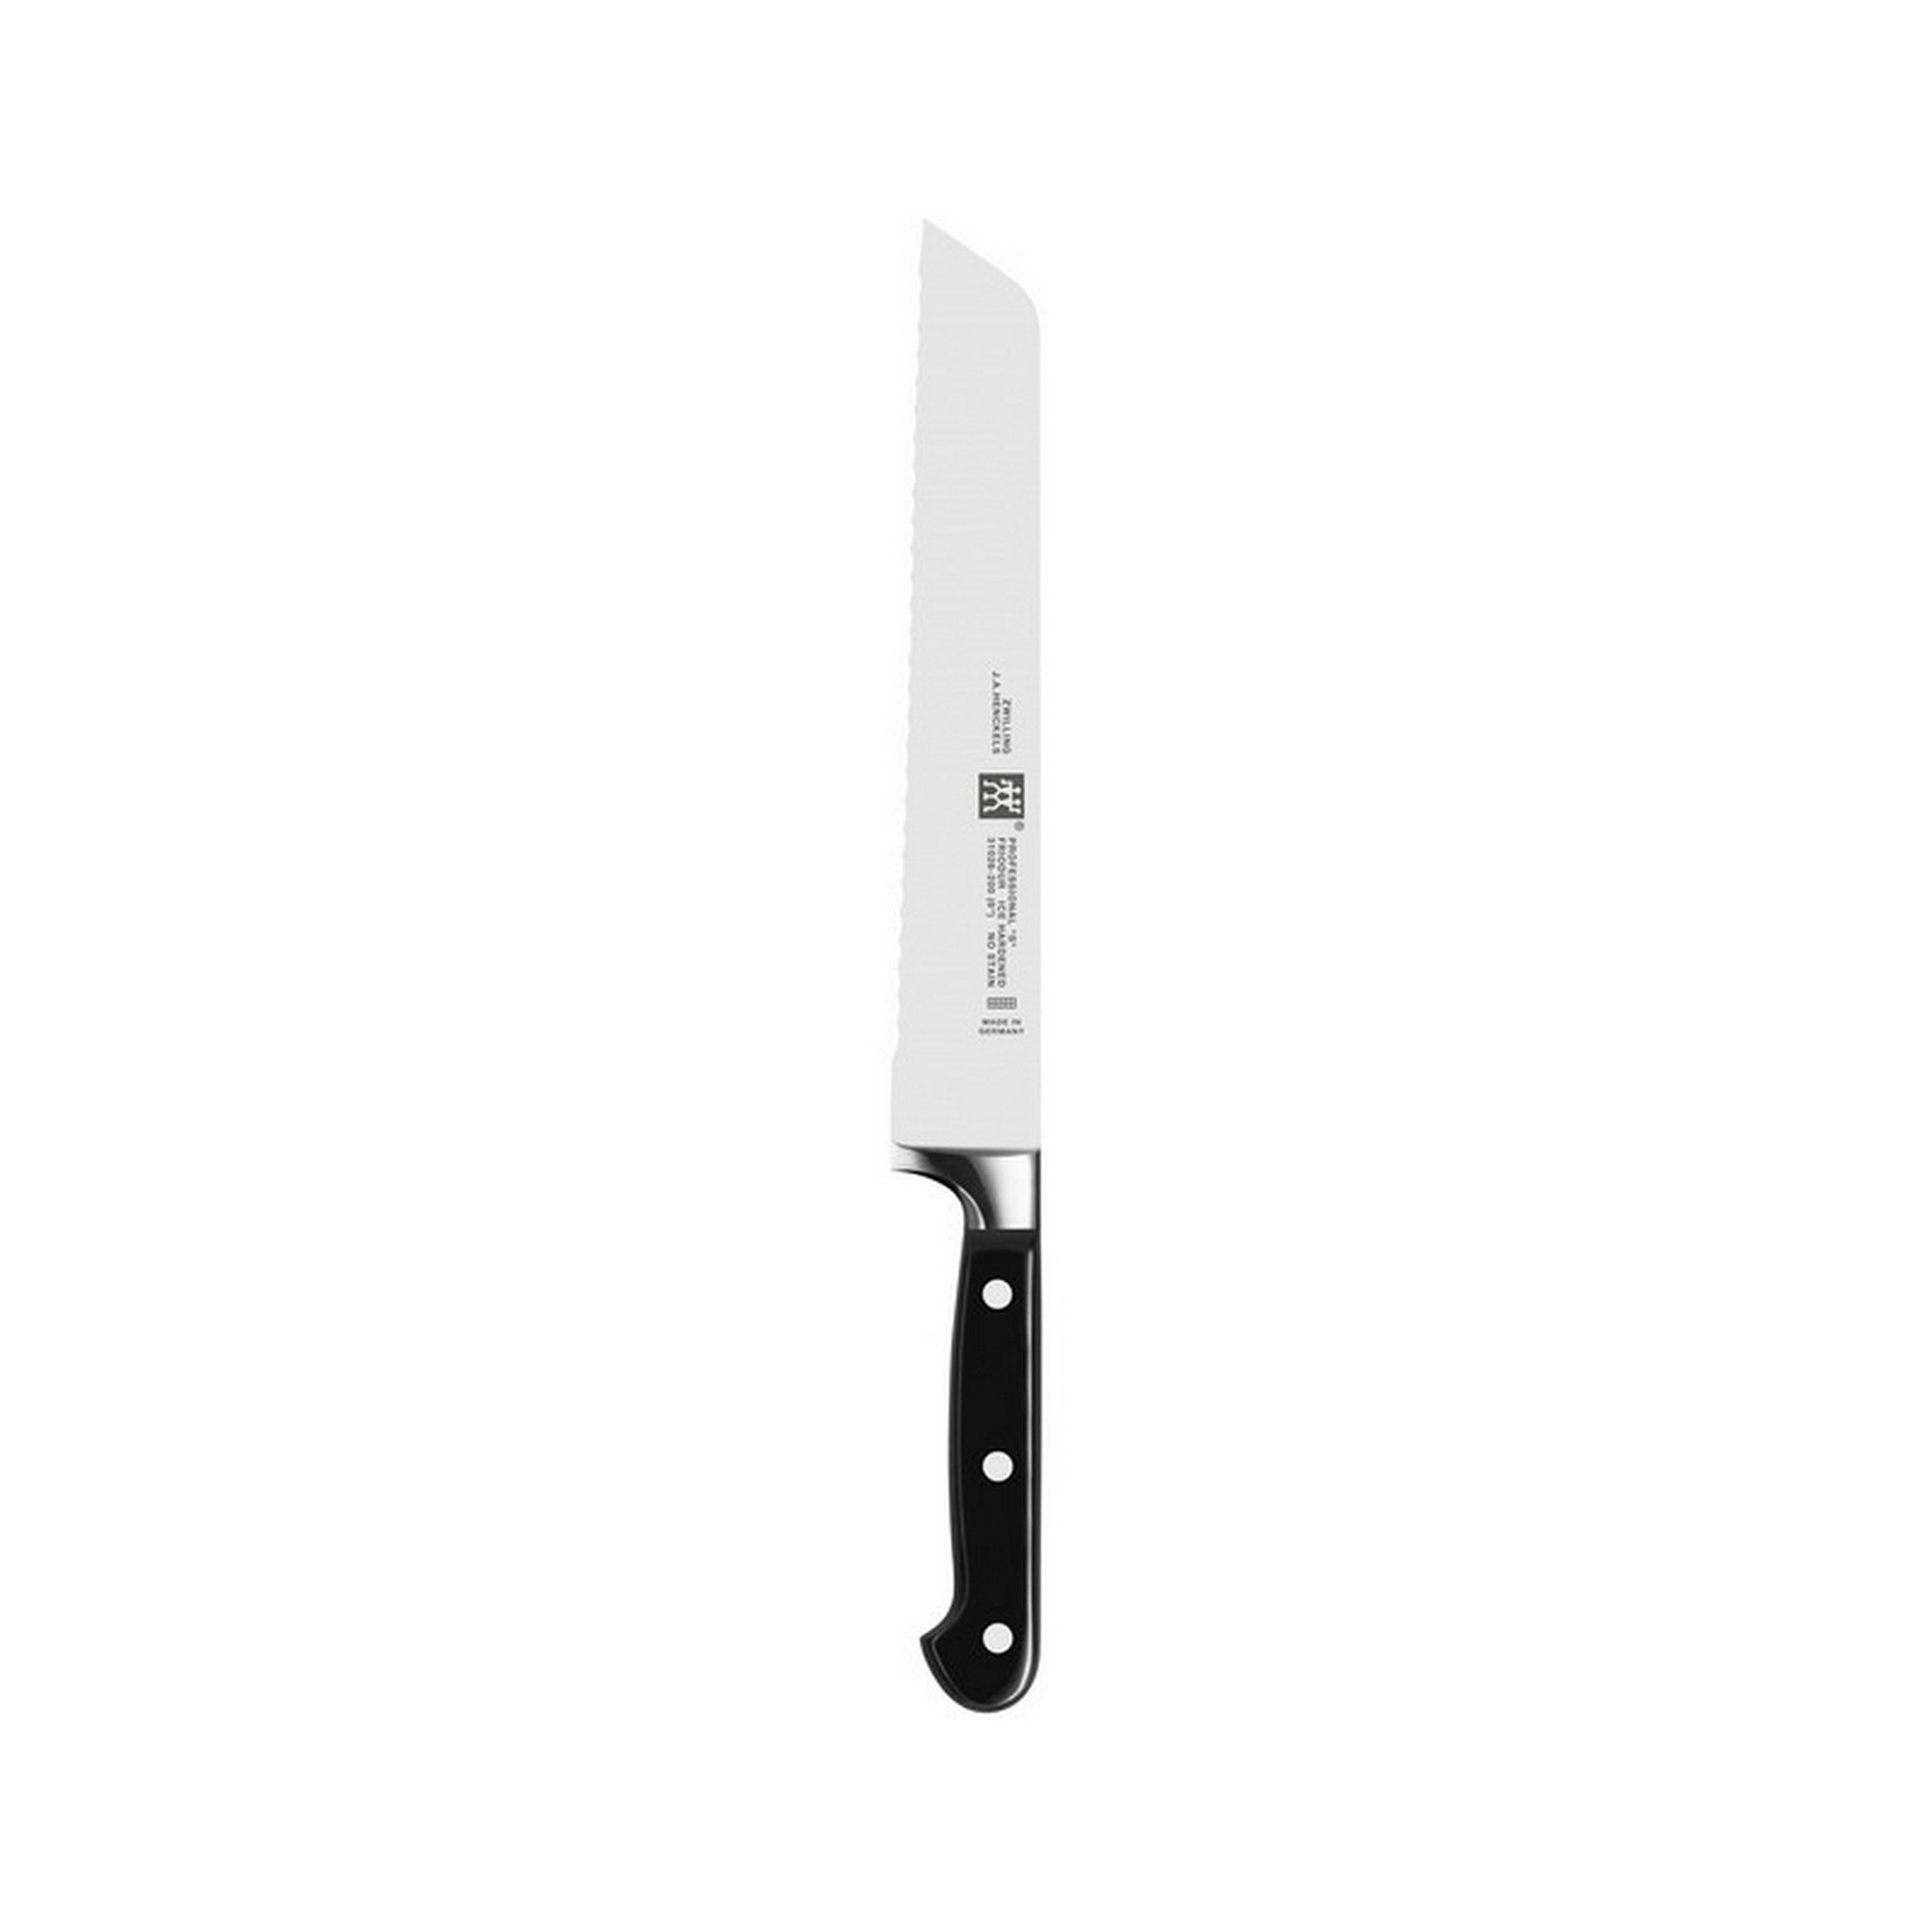 Нож для хлеба Zwilling Professional S, лезвие 20см Zwilling 31026-201, цвет серебристый